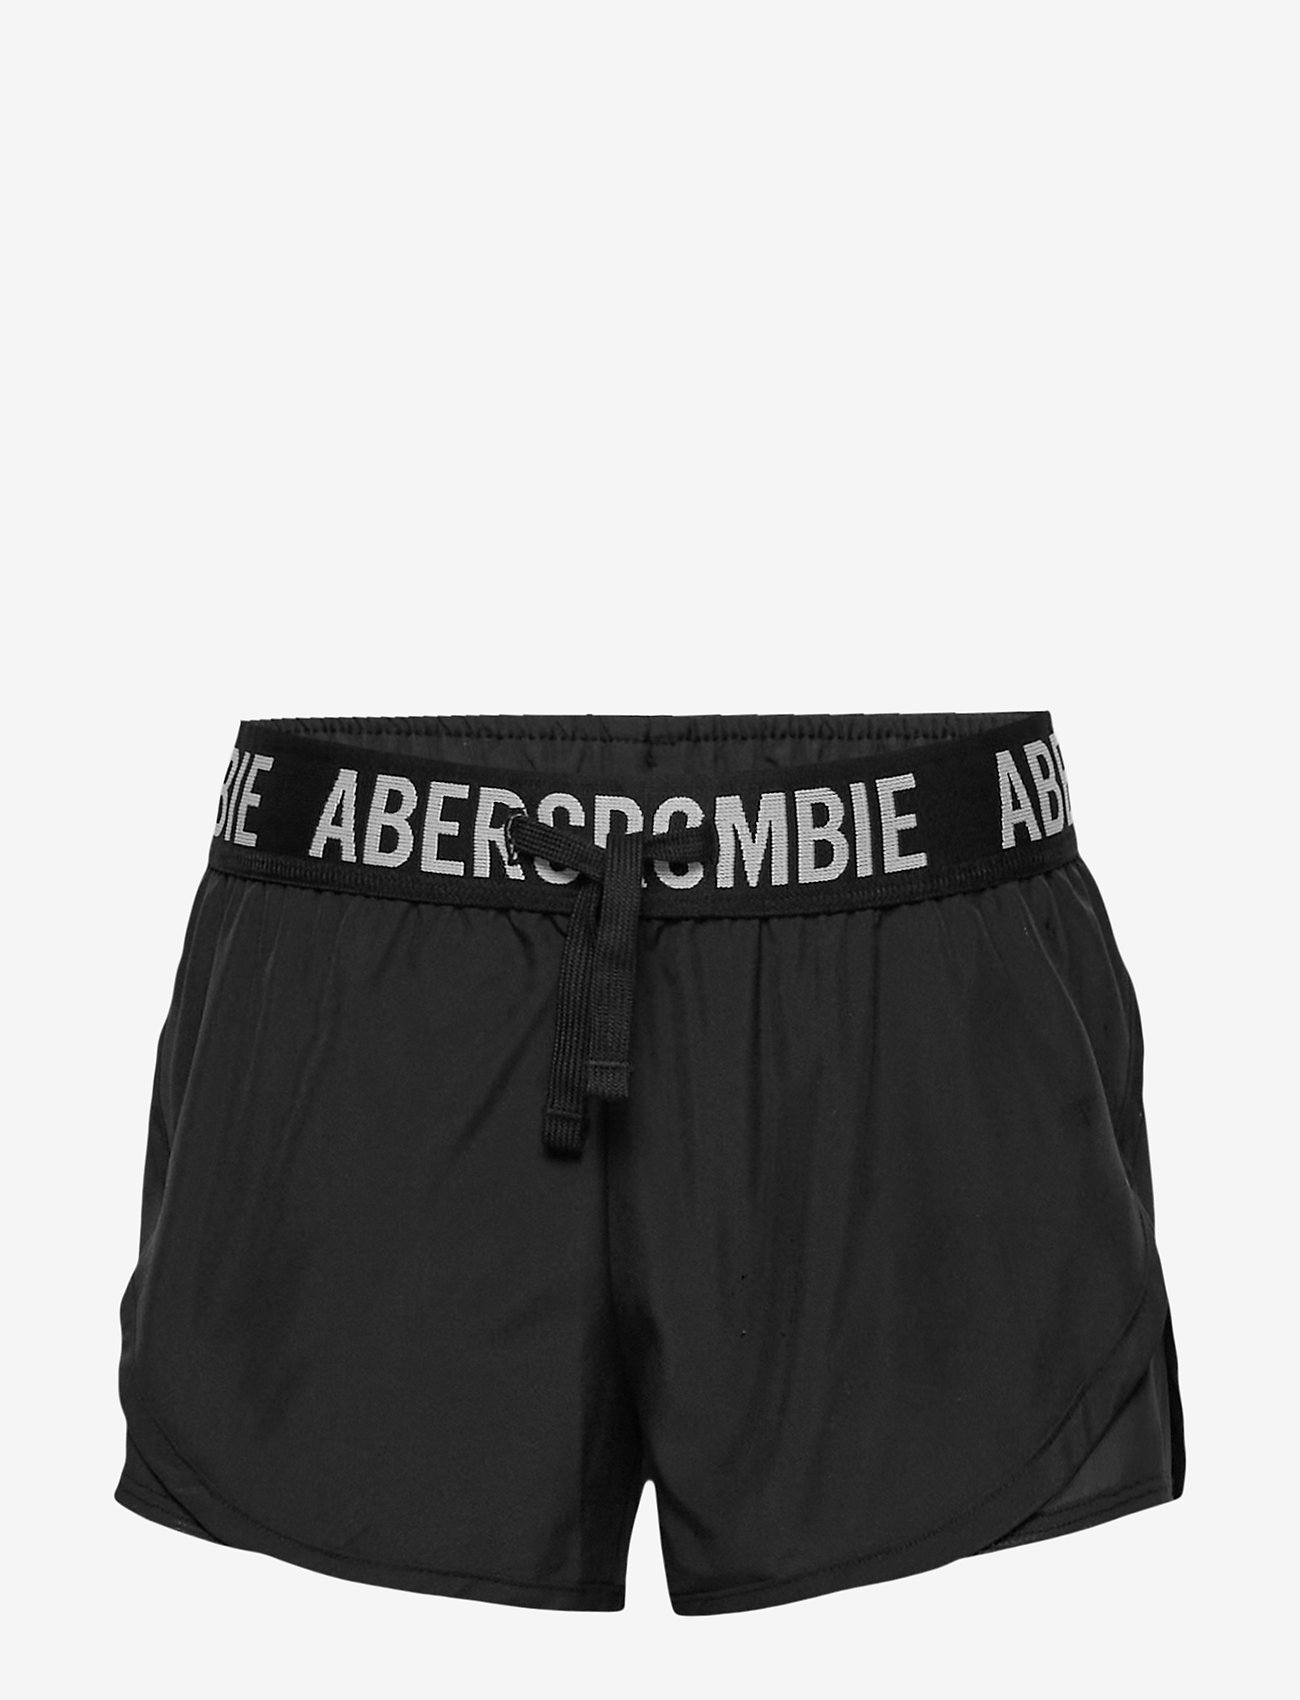 abercrombie shorts